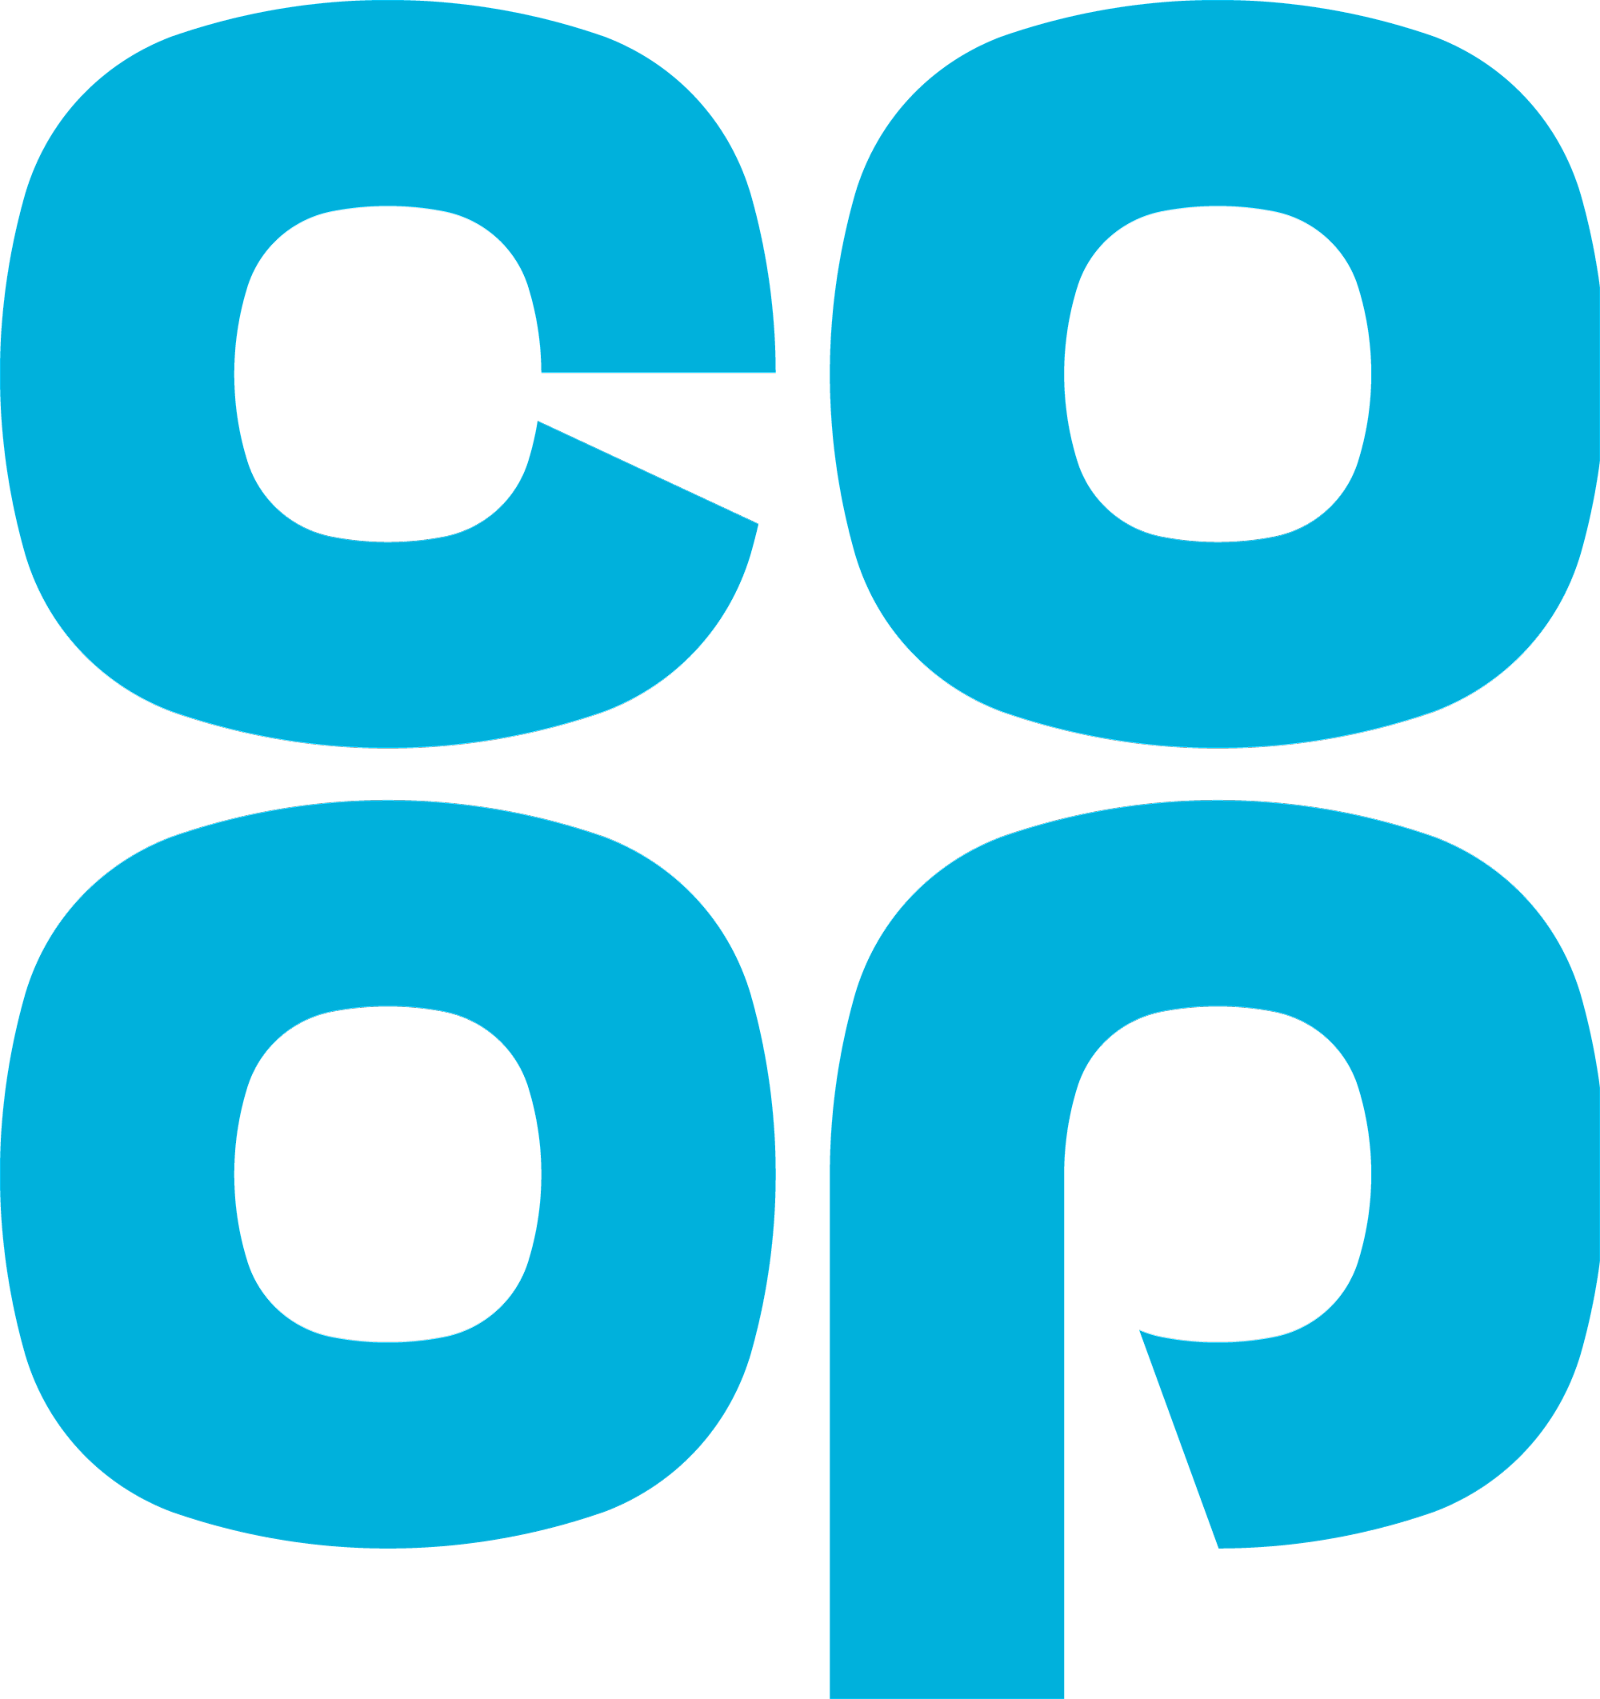 Coop Brand Image